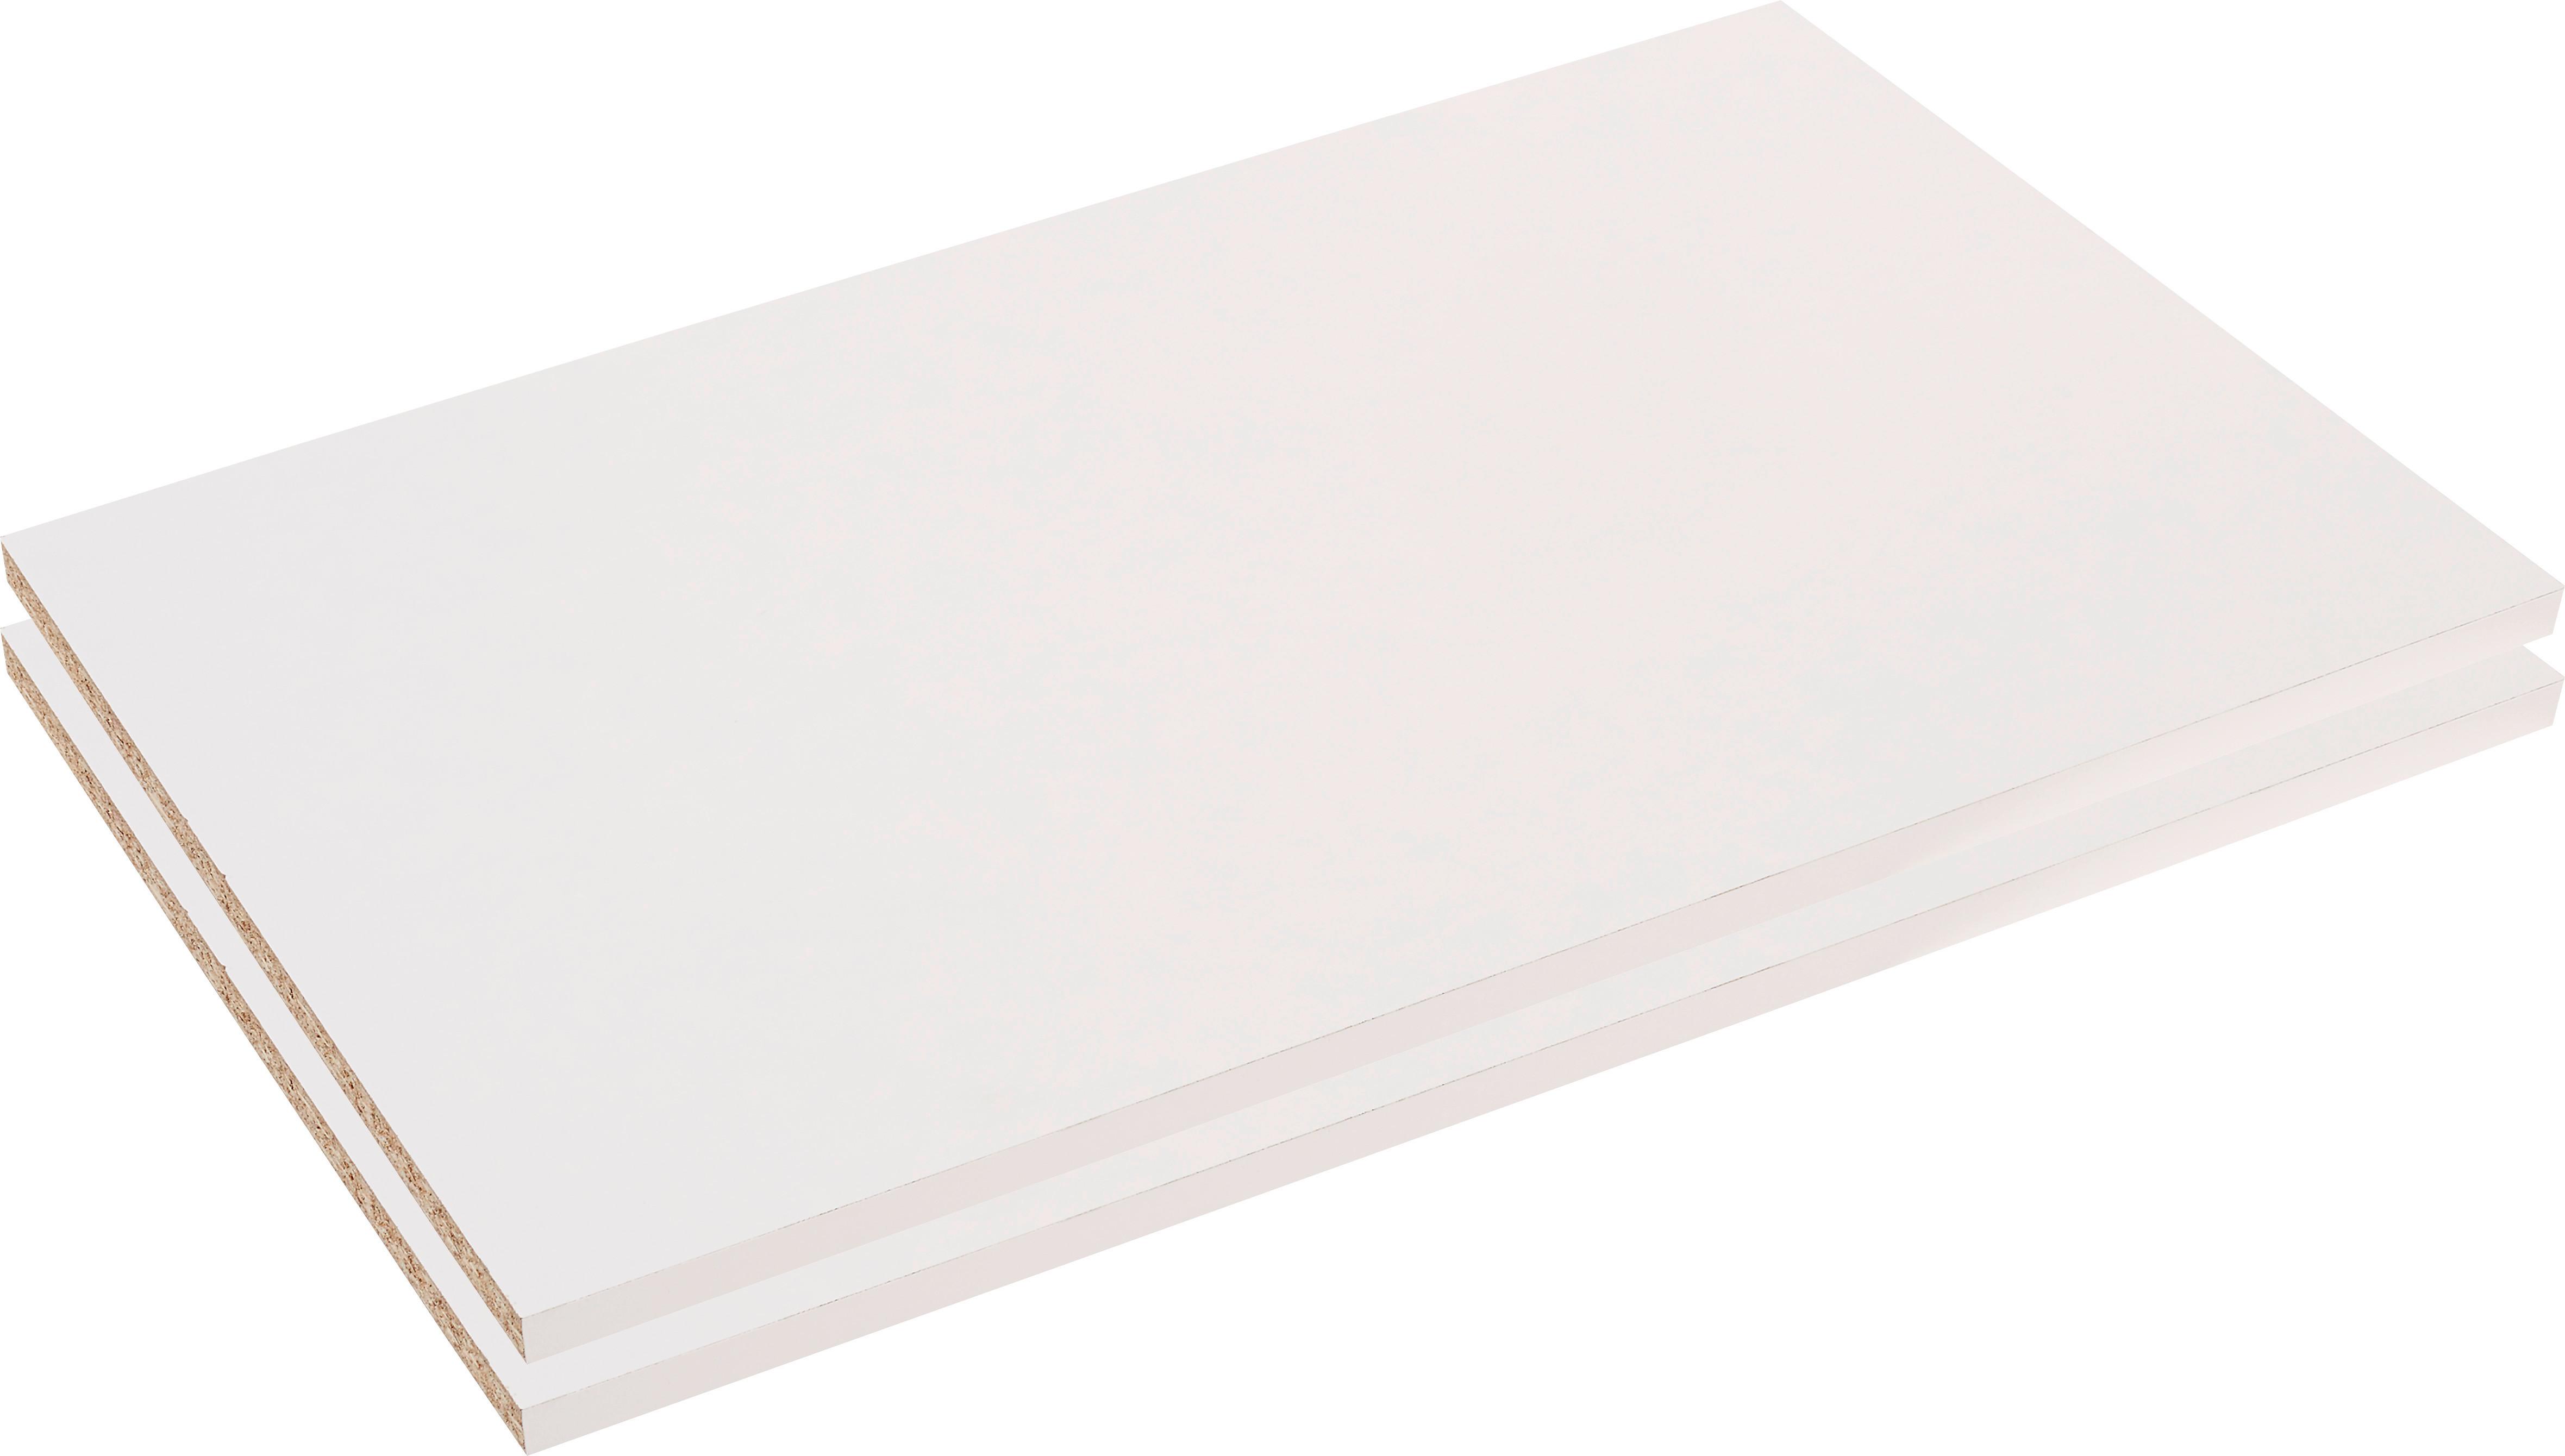 Einlegeböden Malta 2er-Set 82x46,5 cm - Weiß, Holz (83/2,2/46,5cm)